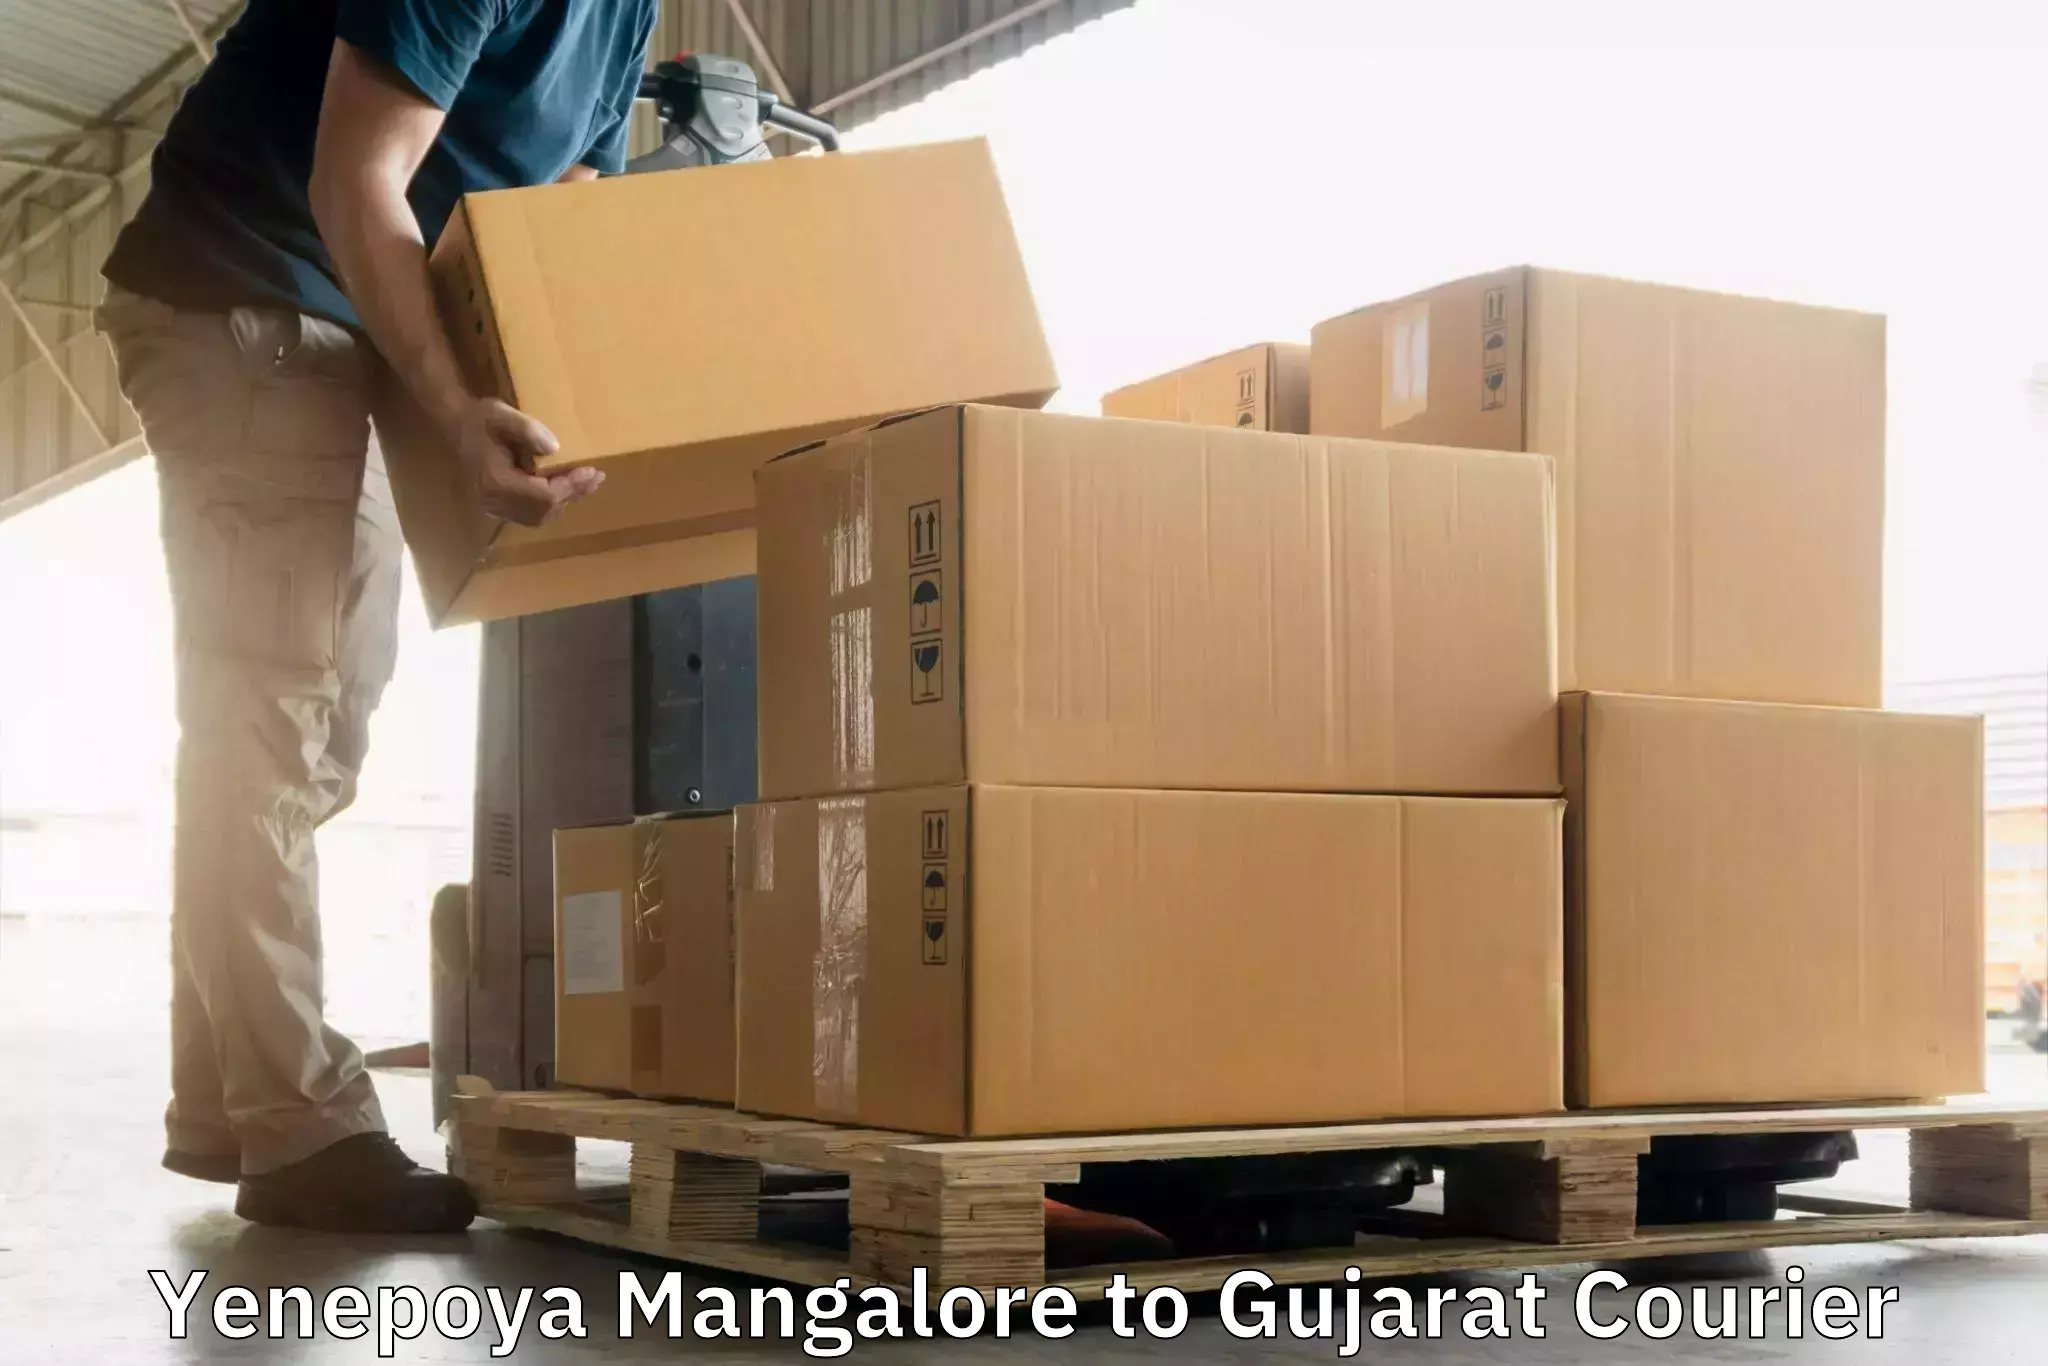 State-of-the-art courier technology Yenepoya Mangalore to Vadodara